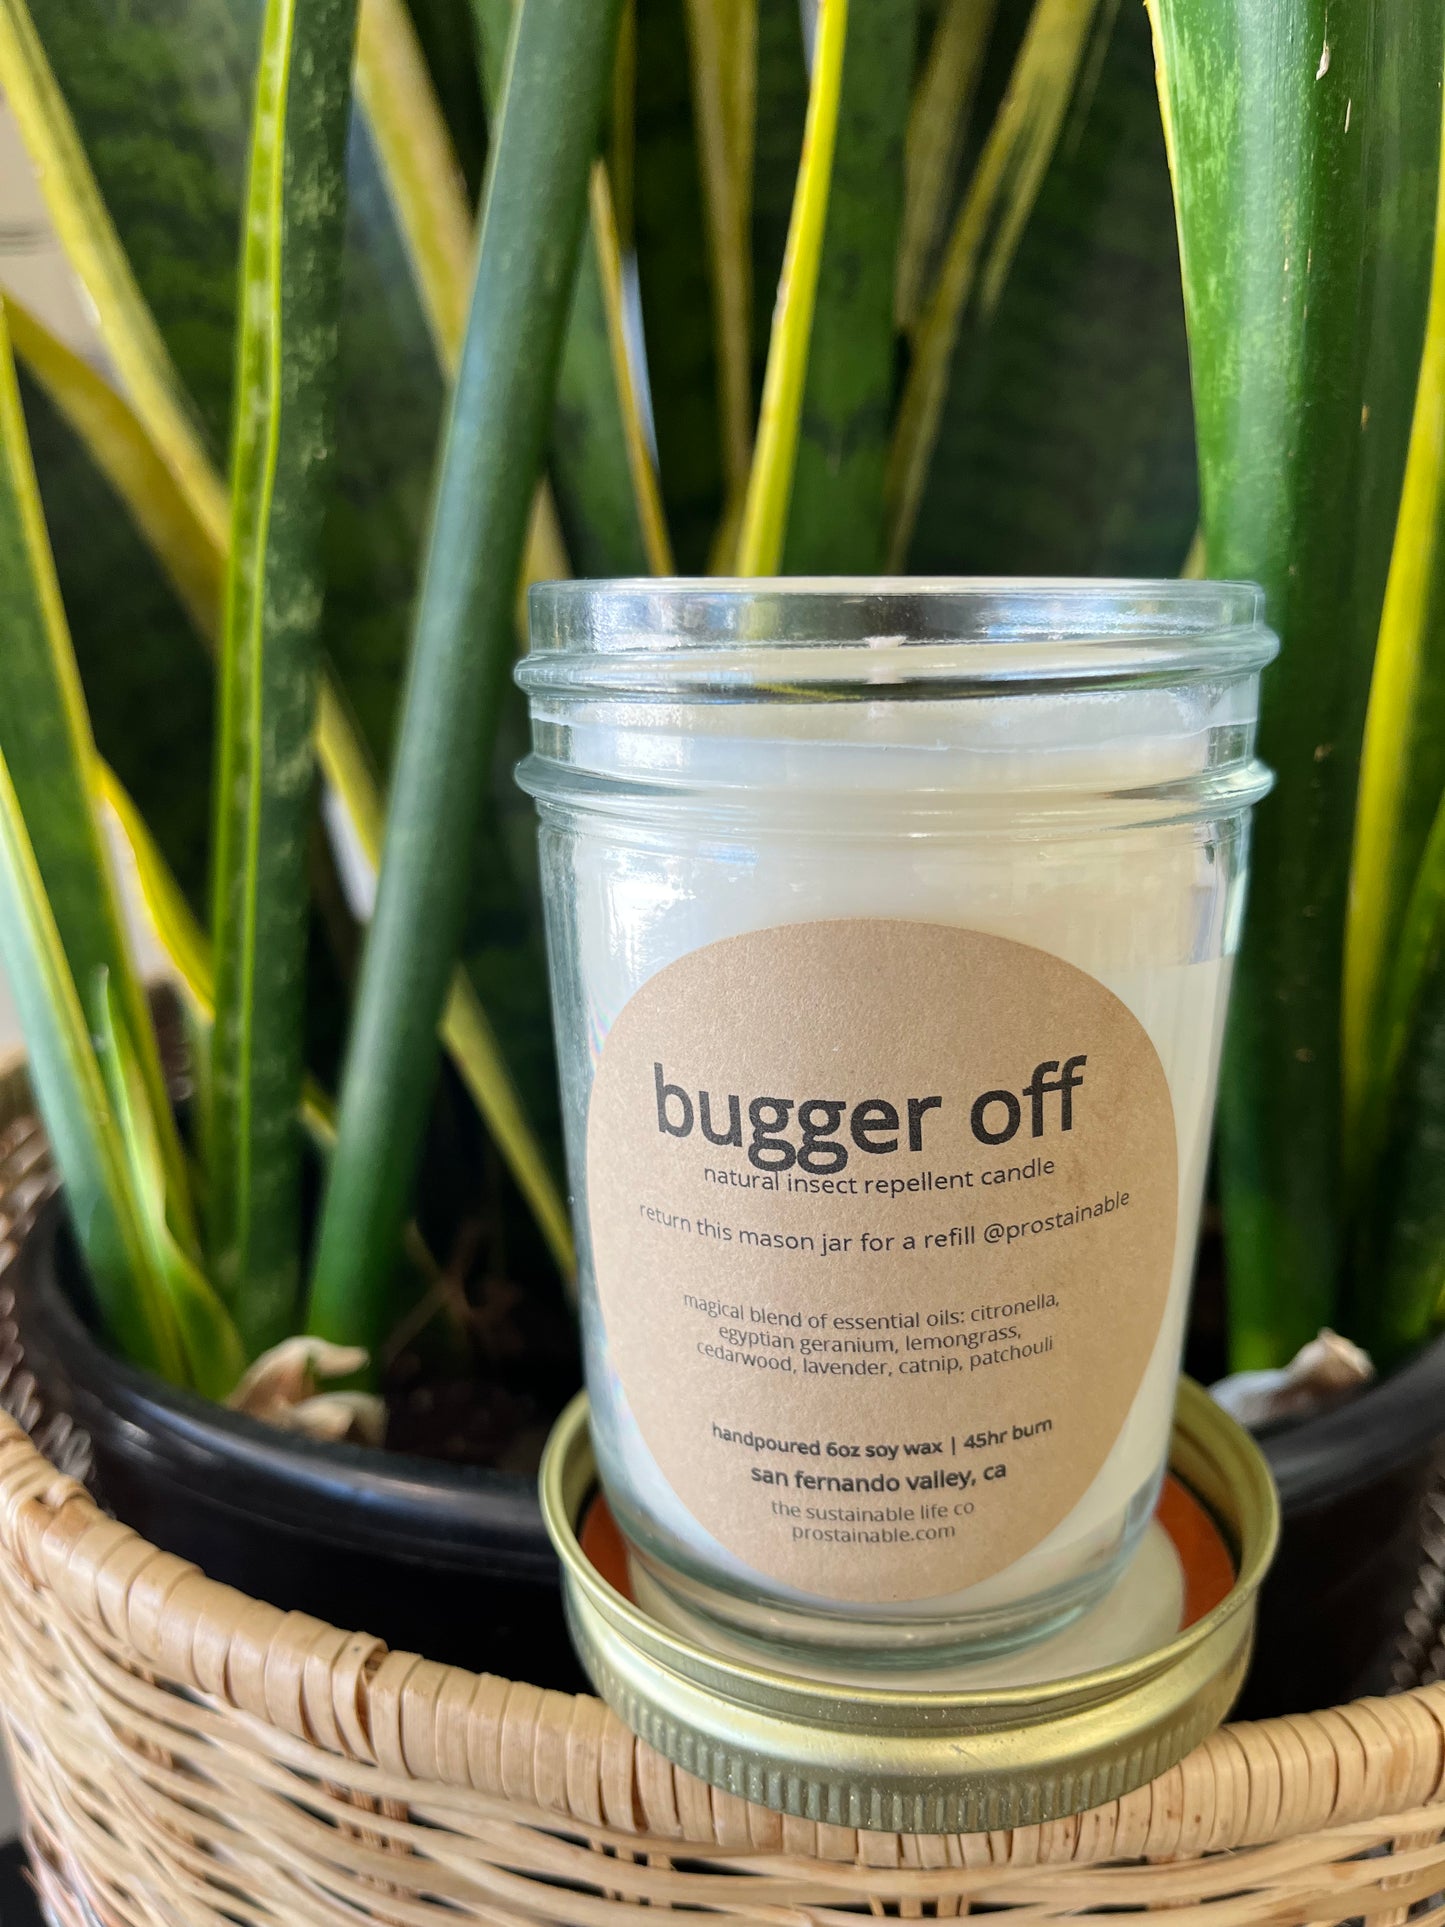 Bugger off candle - natural bug repellent 6oz